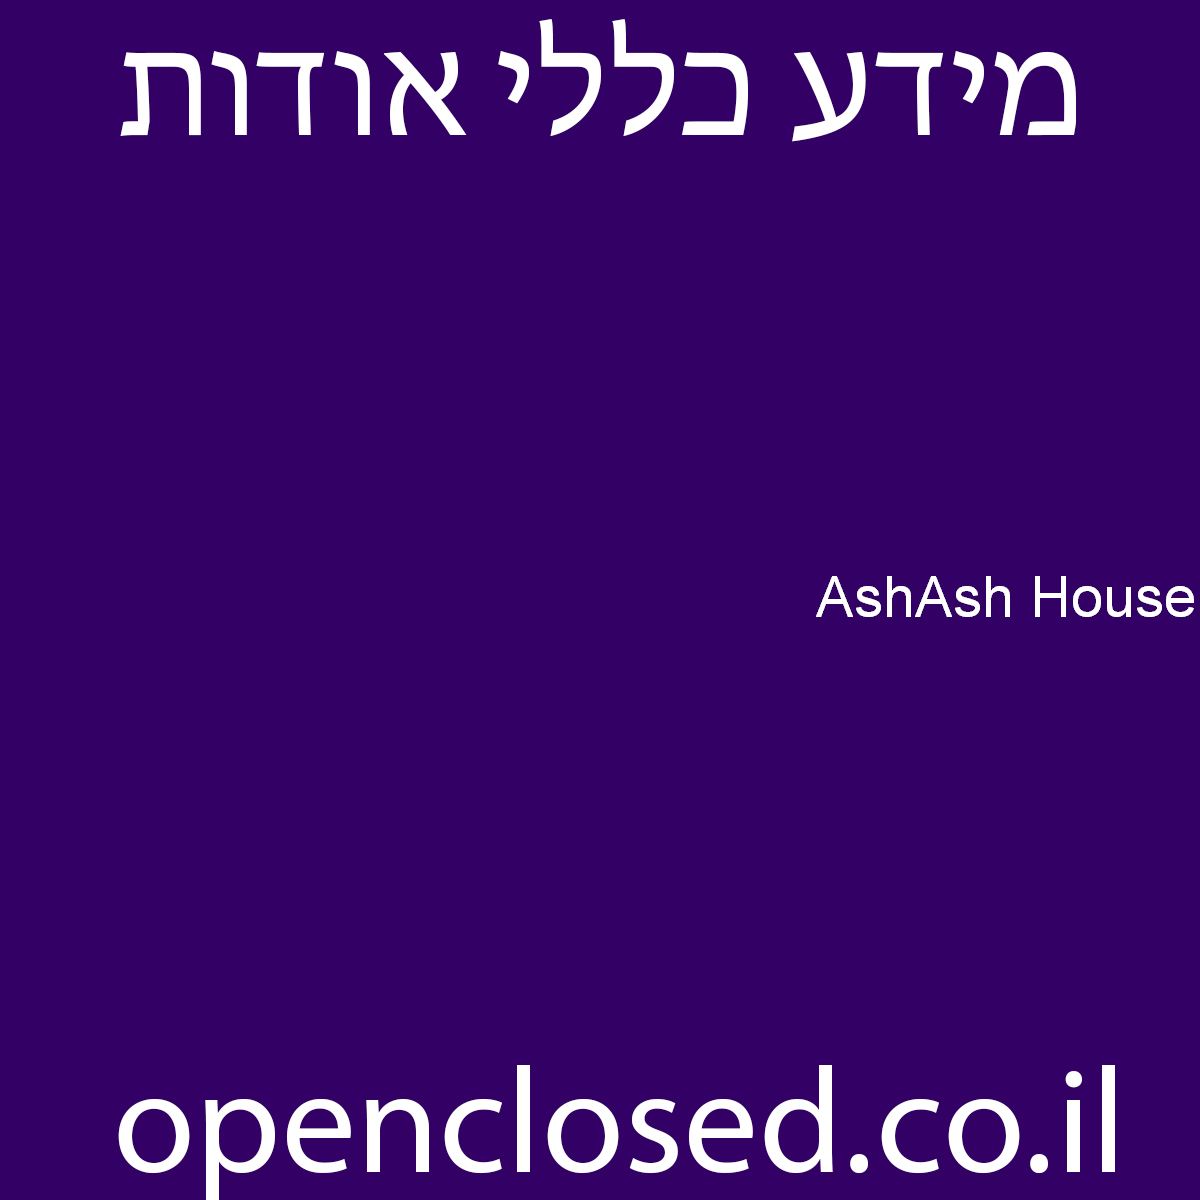 AshAsh House